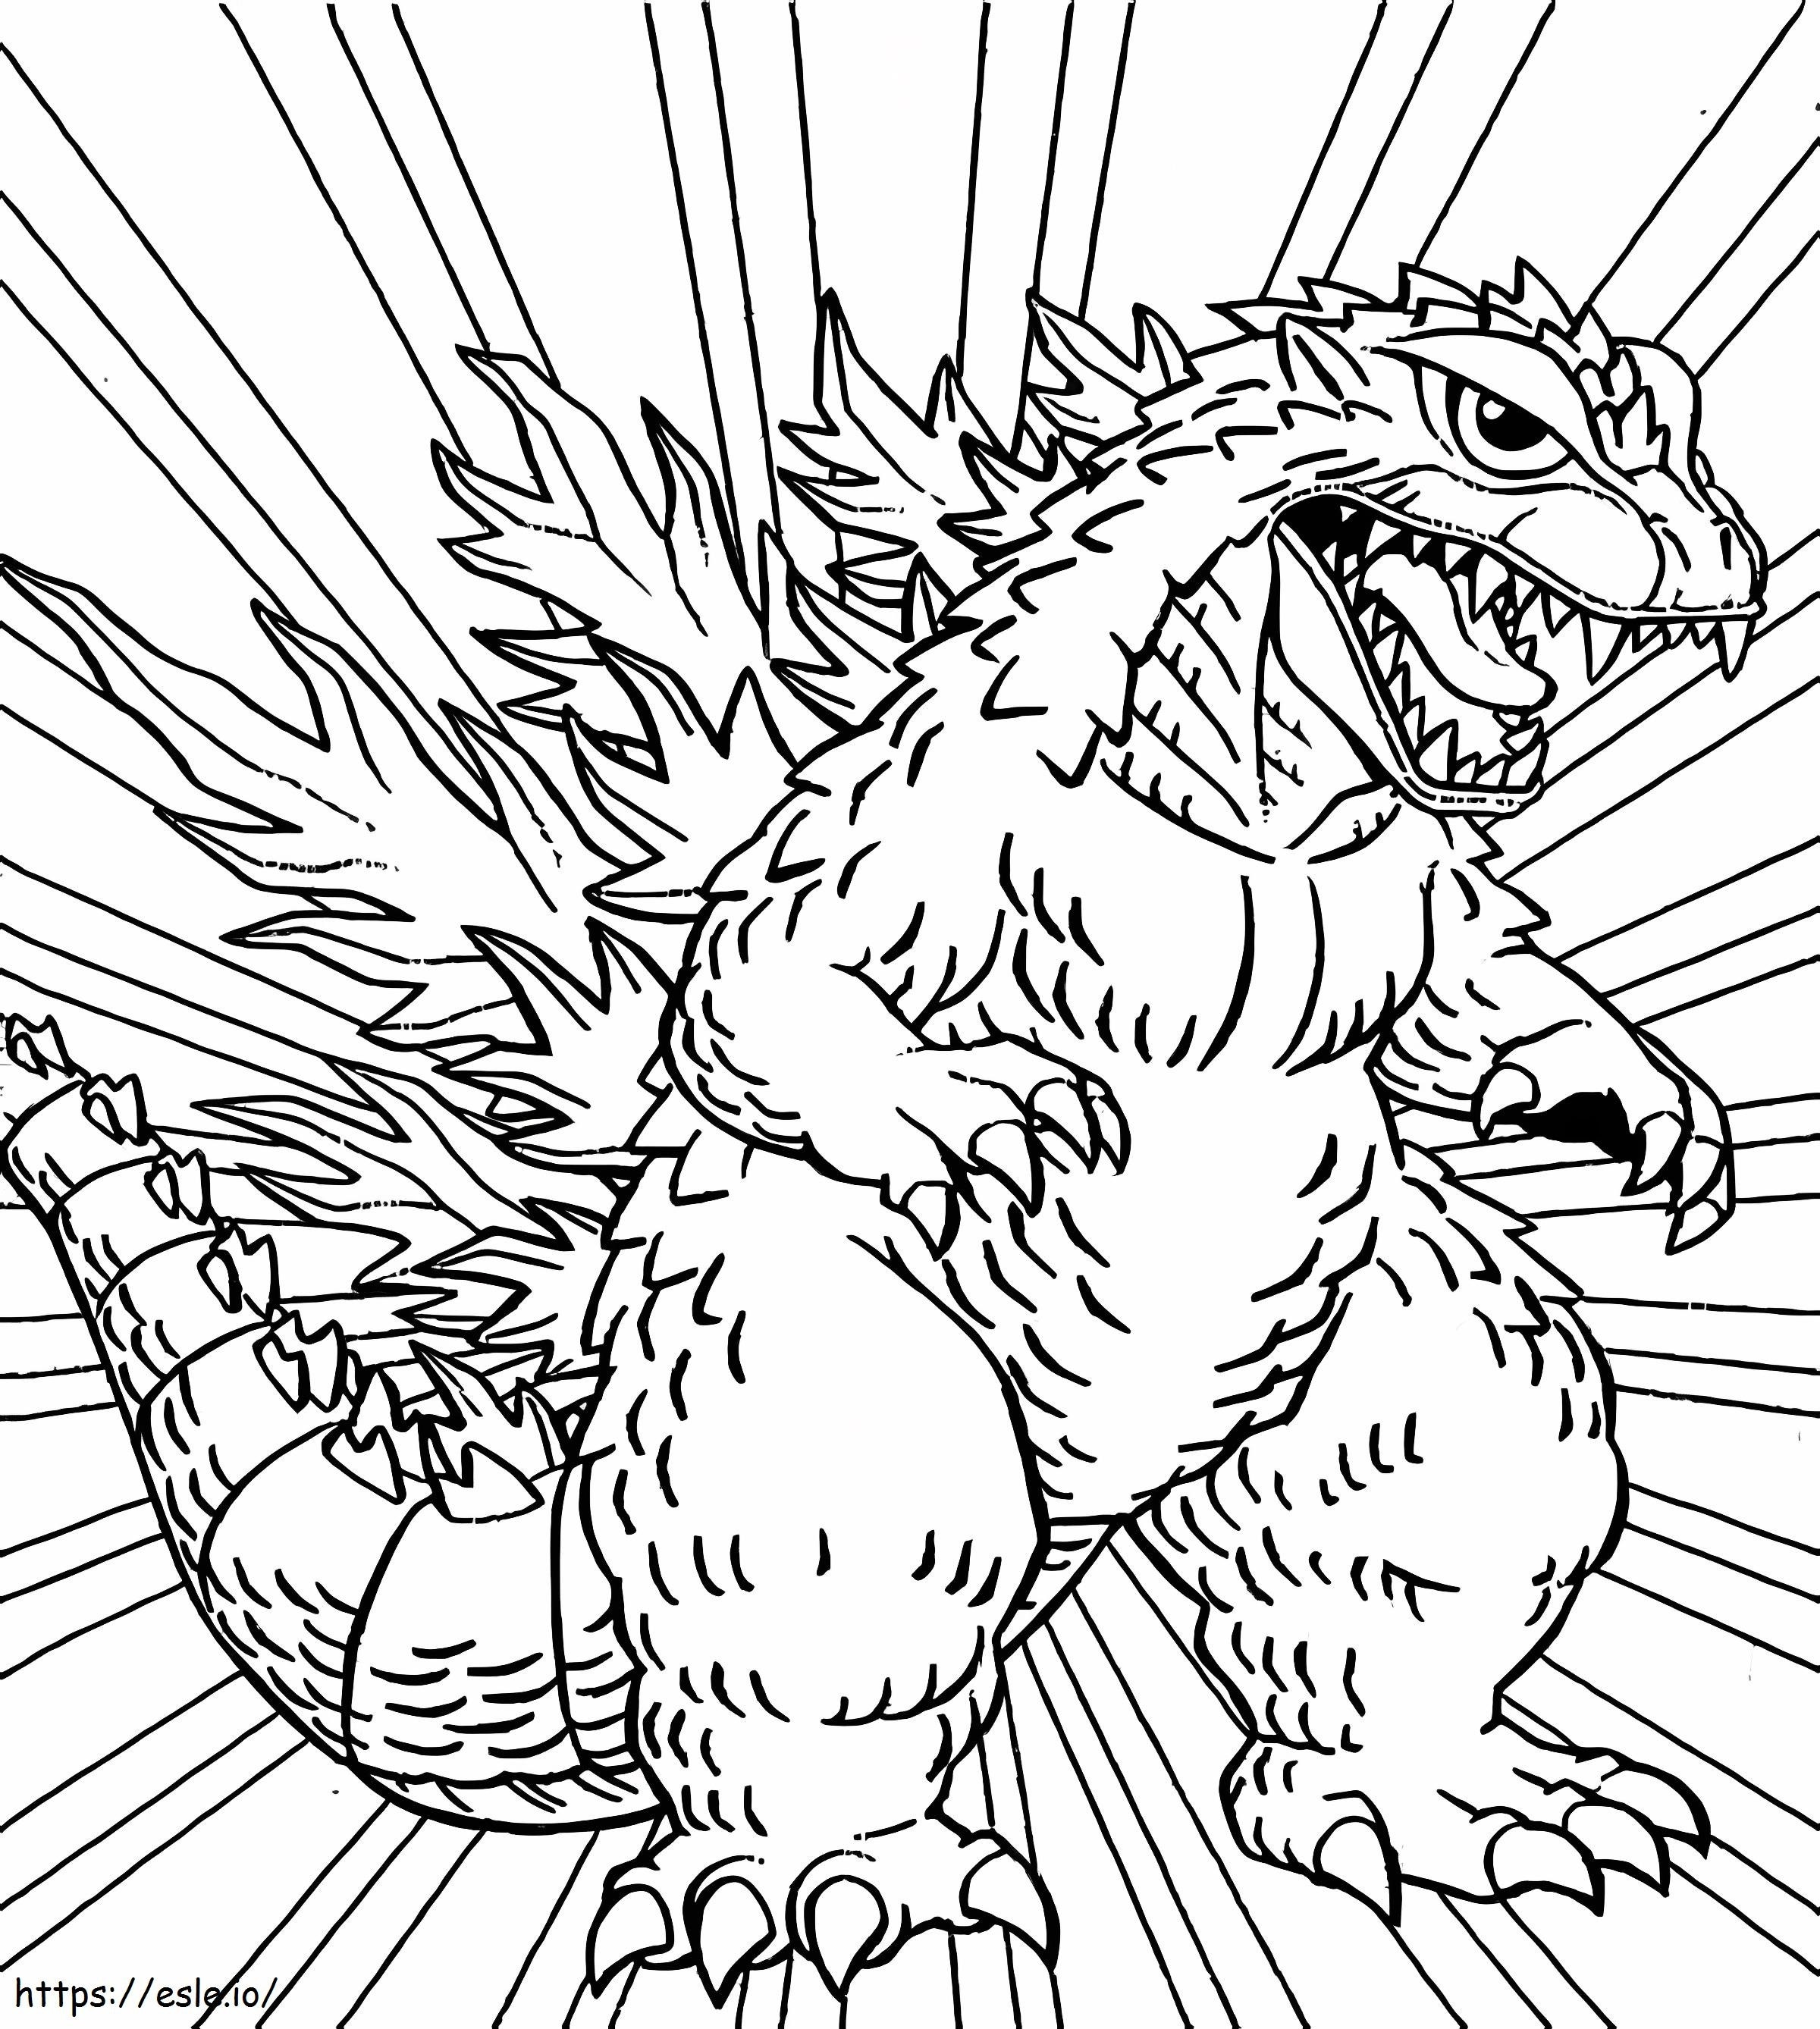 Cartoon Godzilla coloring page